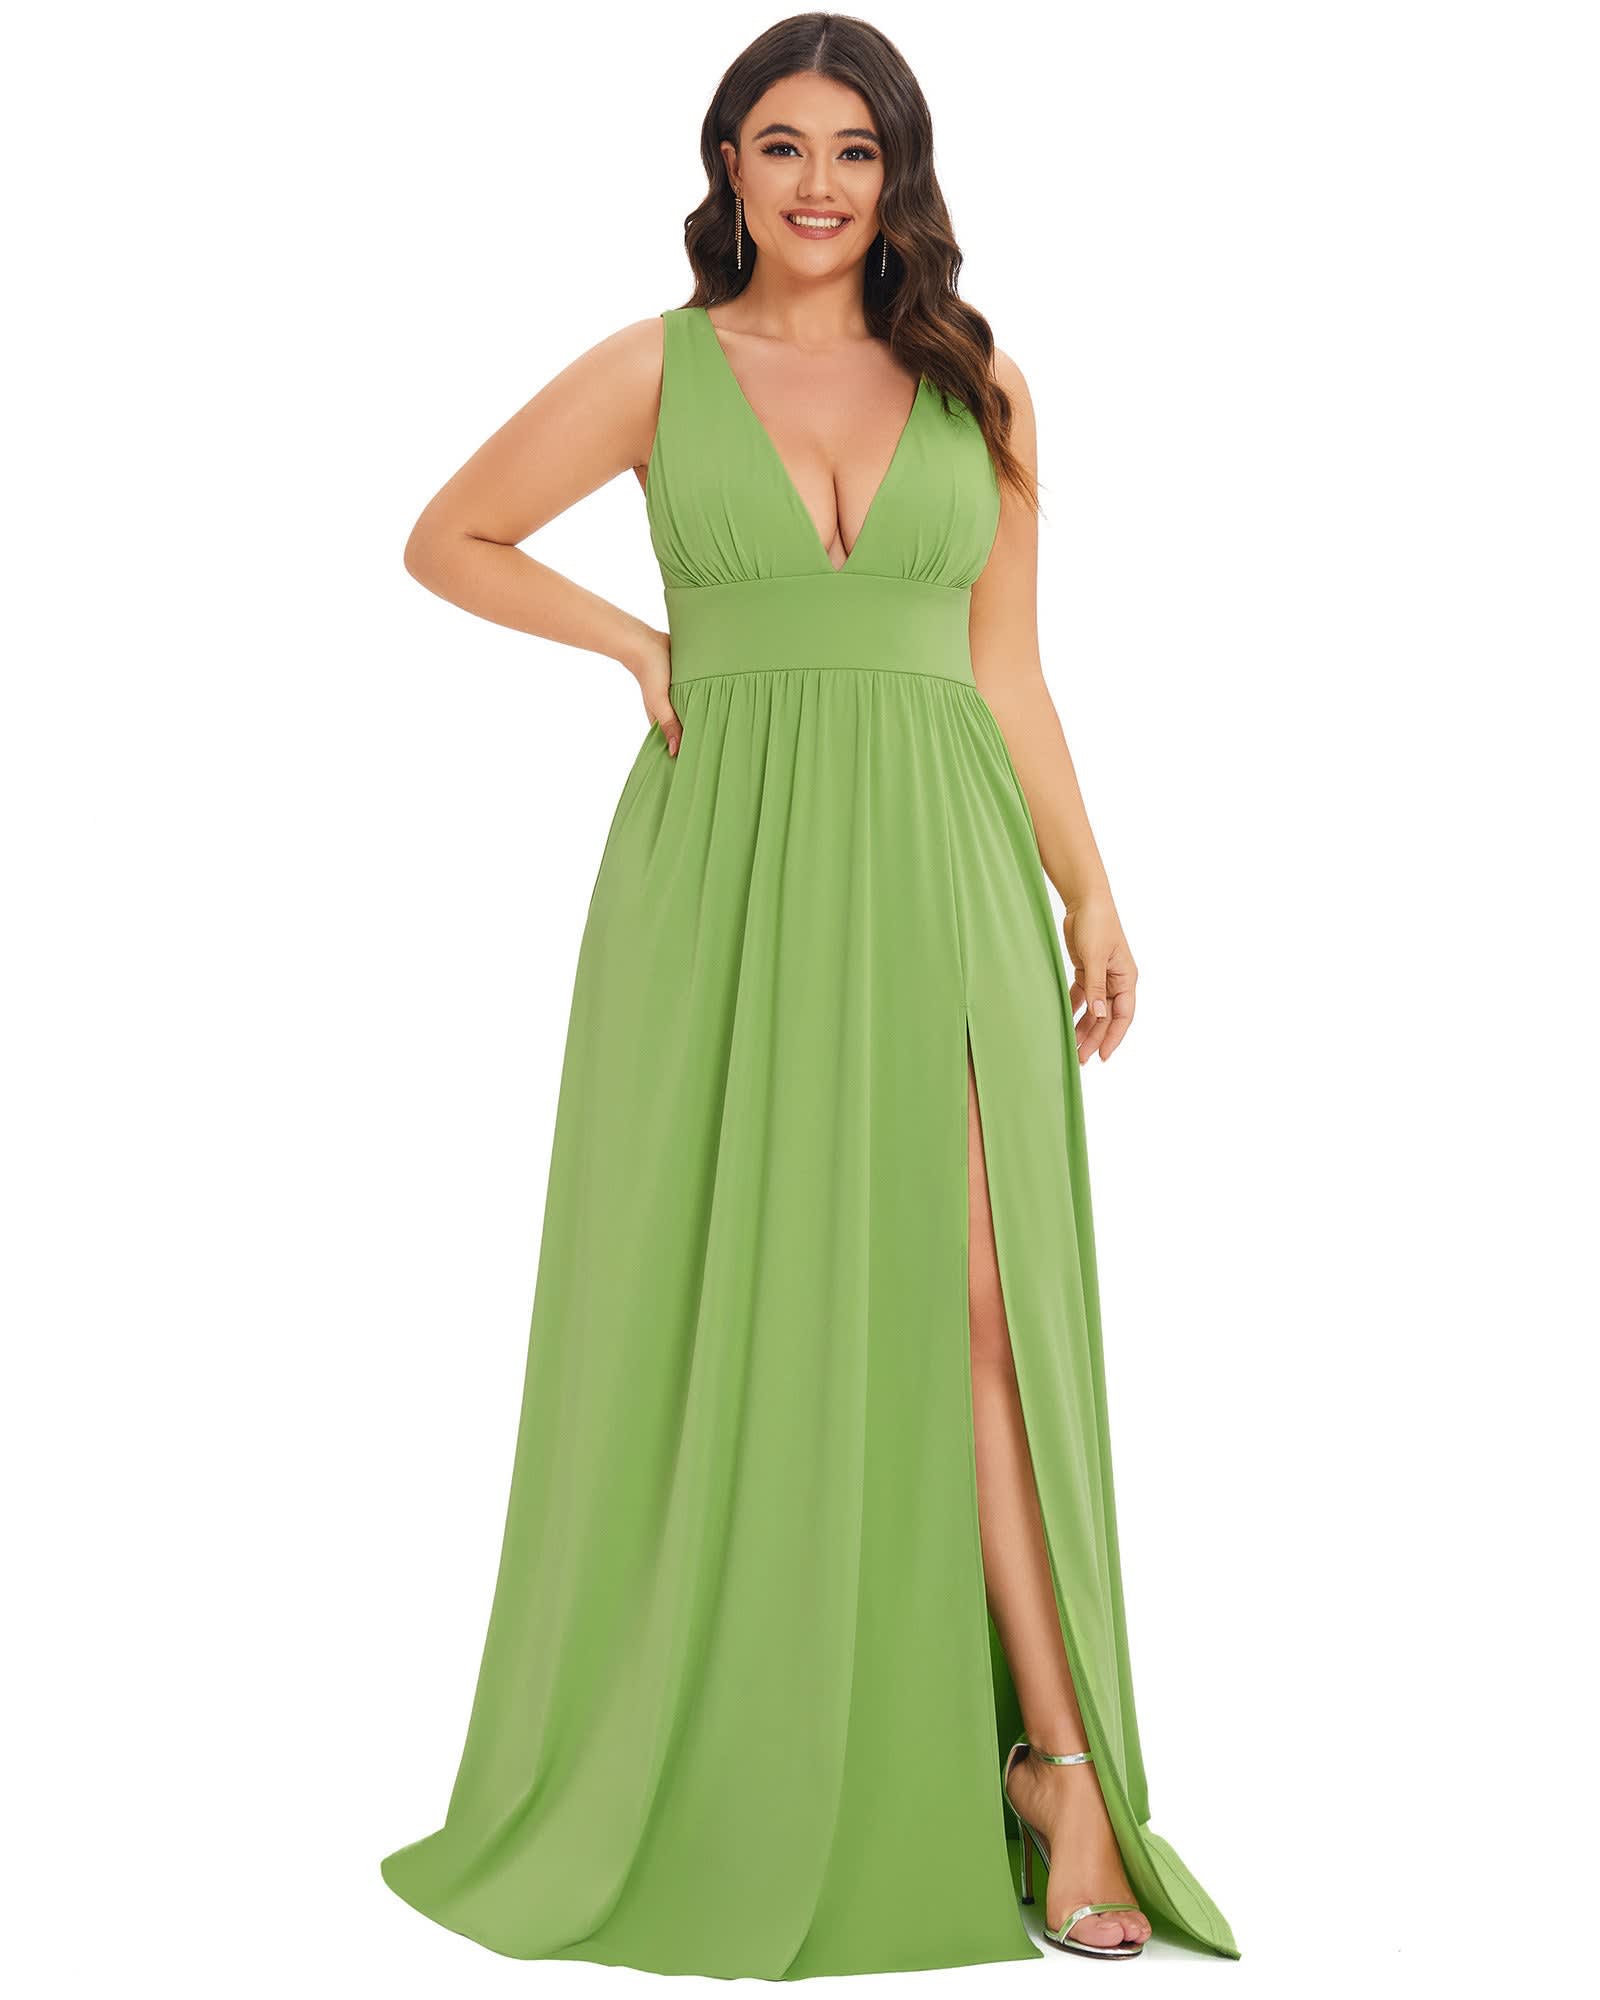 Sleeveless V-Neck Empire Waist High Slit Floor-Length Evening Dress | Avocado Green